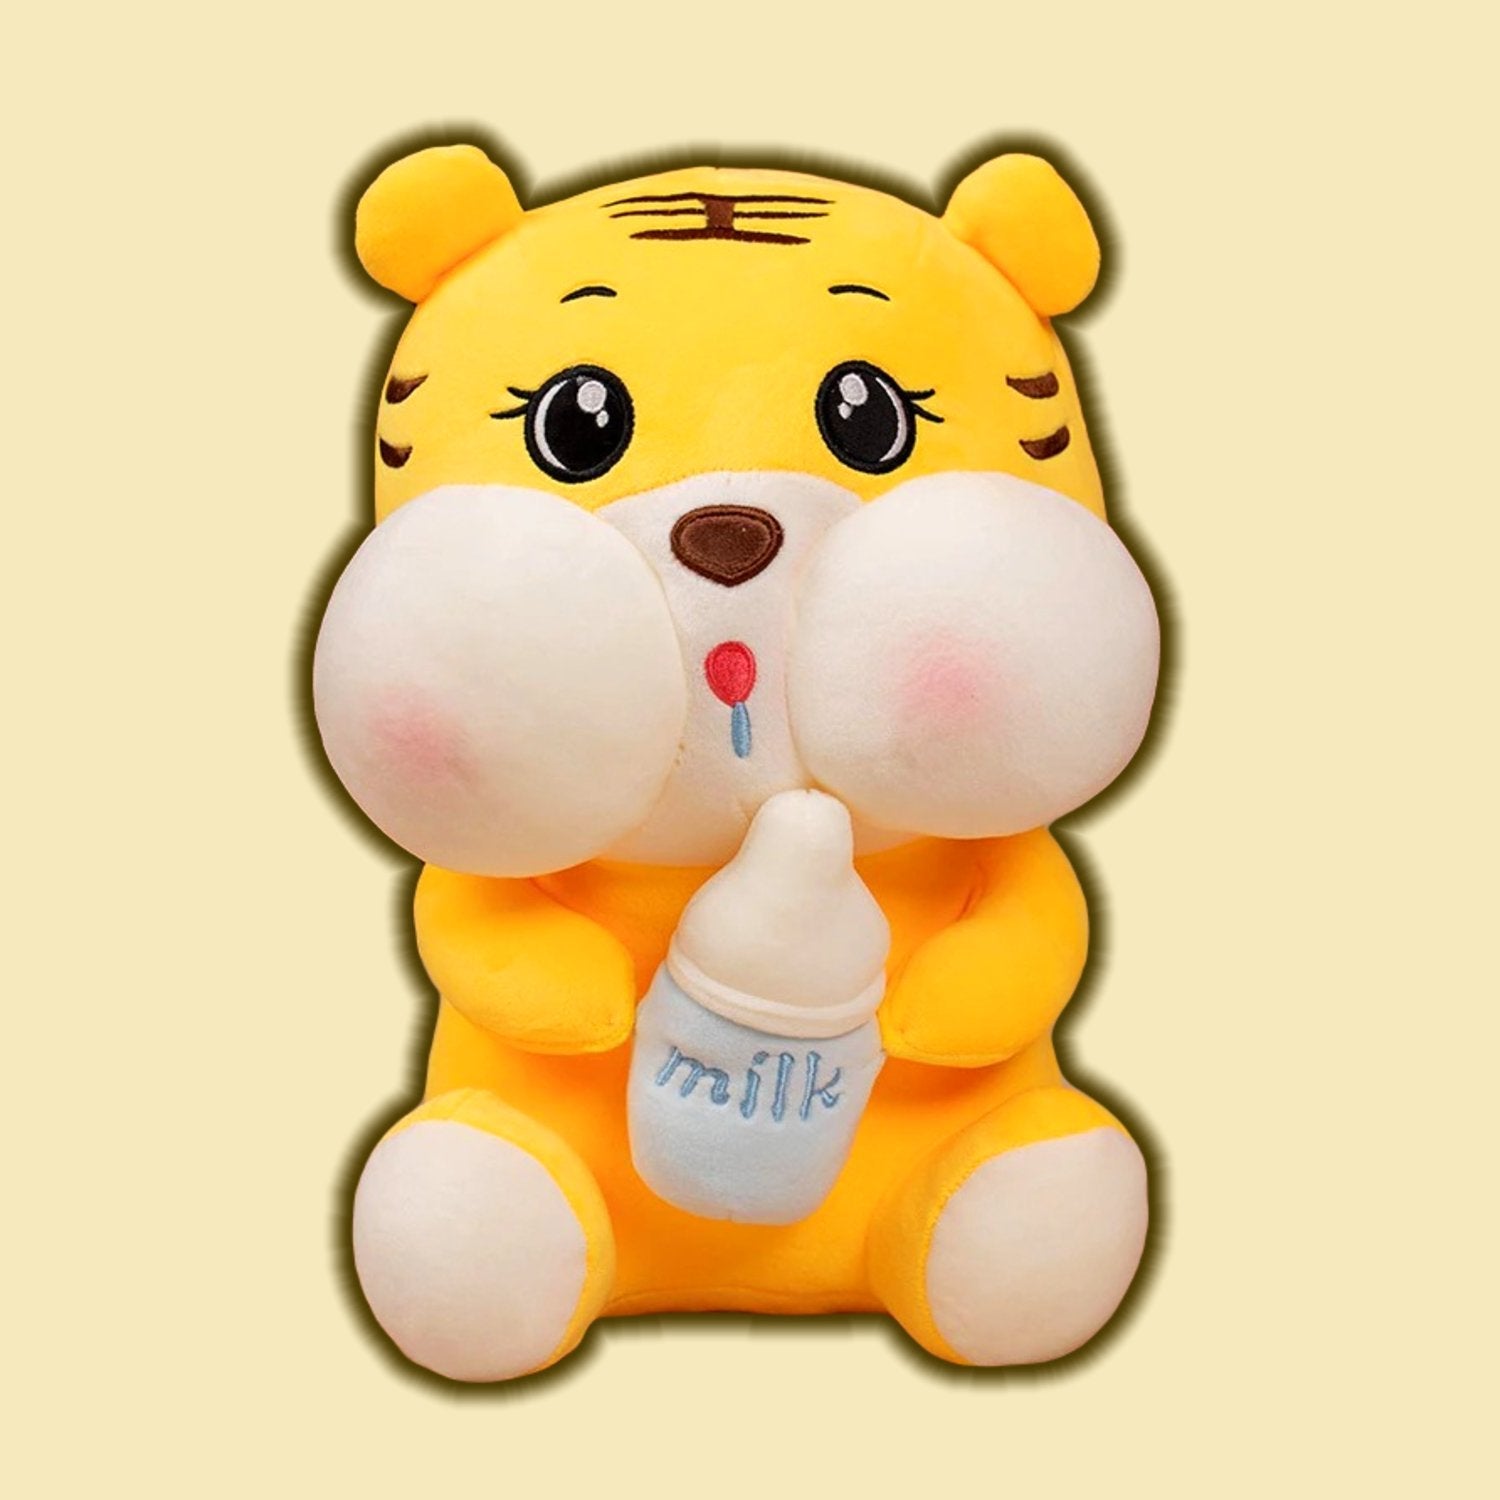 Tiger Hug baby bottle Plush Toy